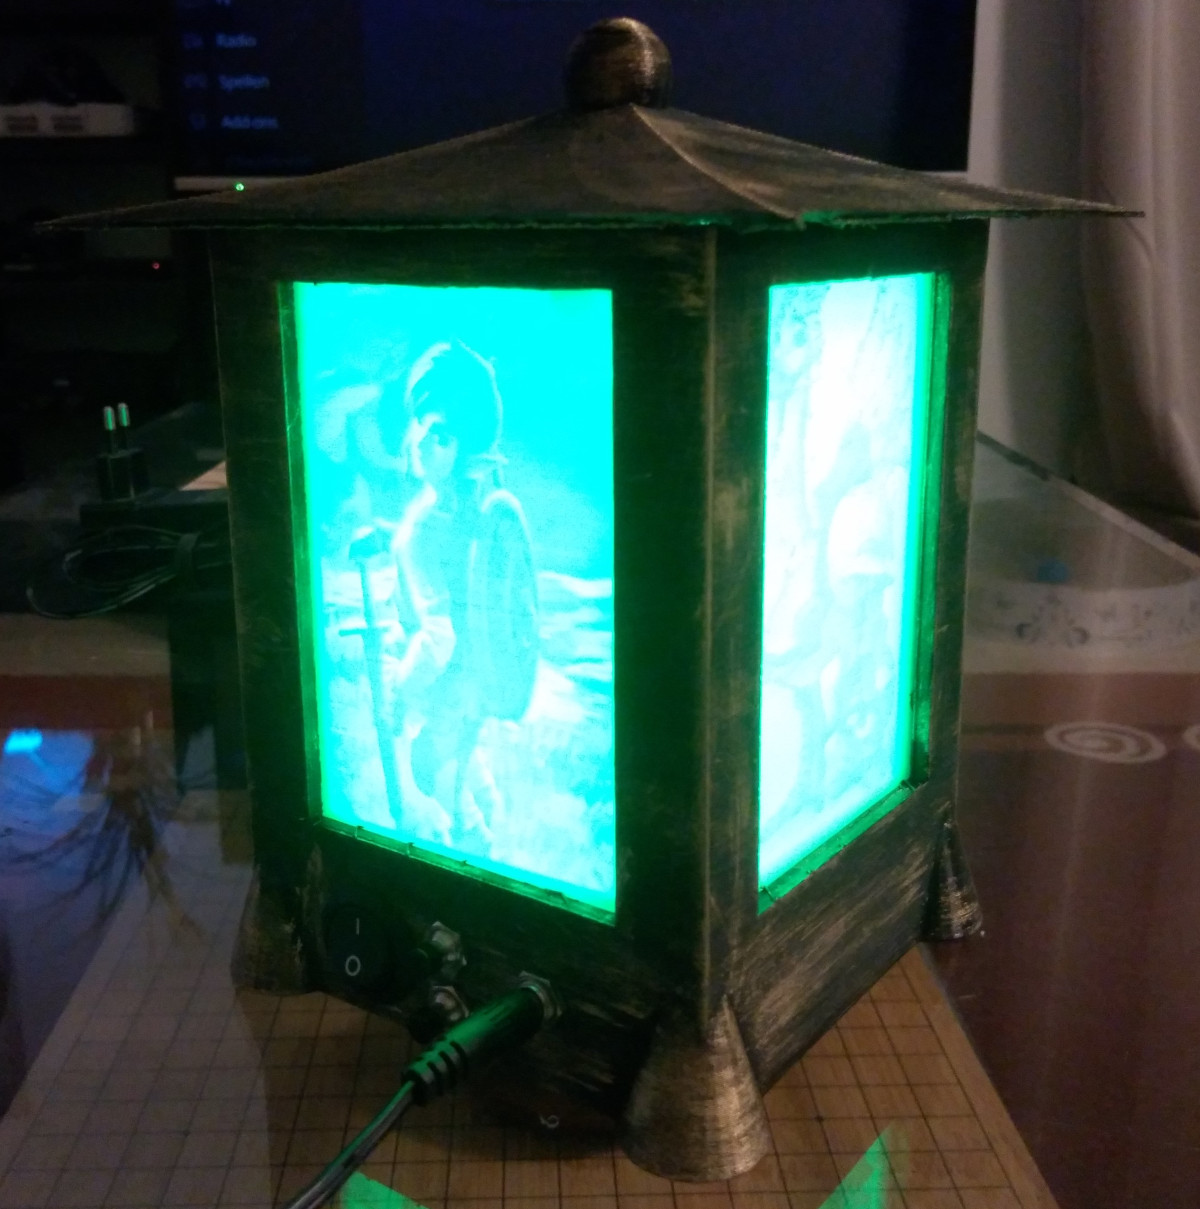 The lithophane lantern with light on